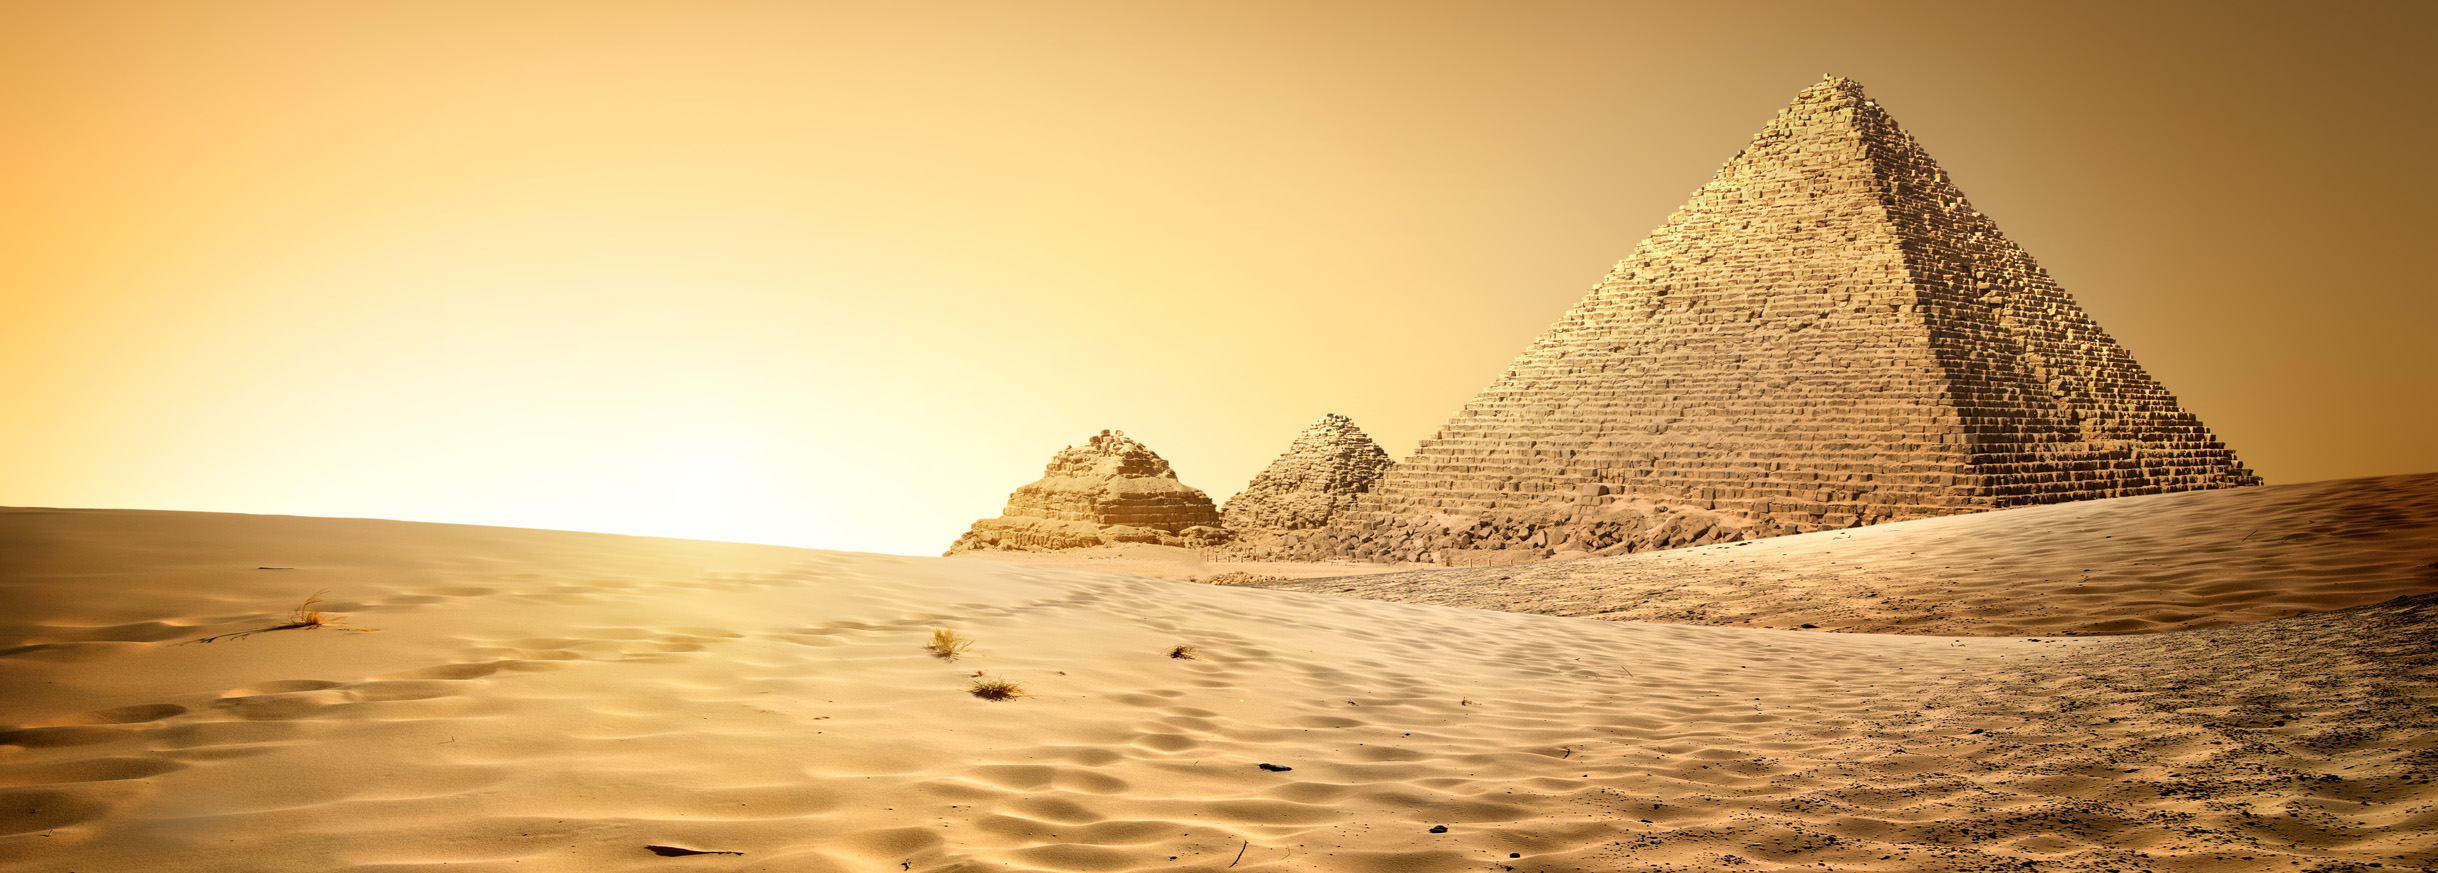 Pyramids on the sand